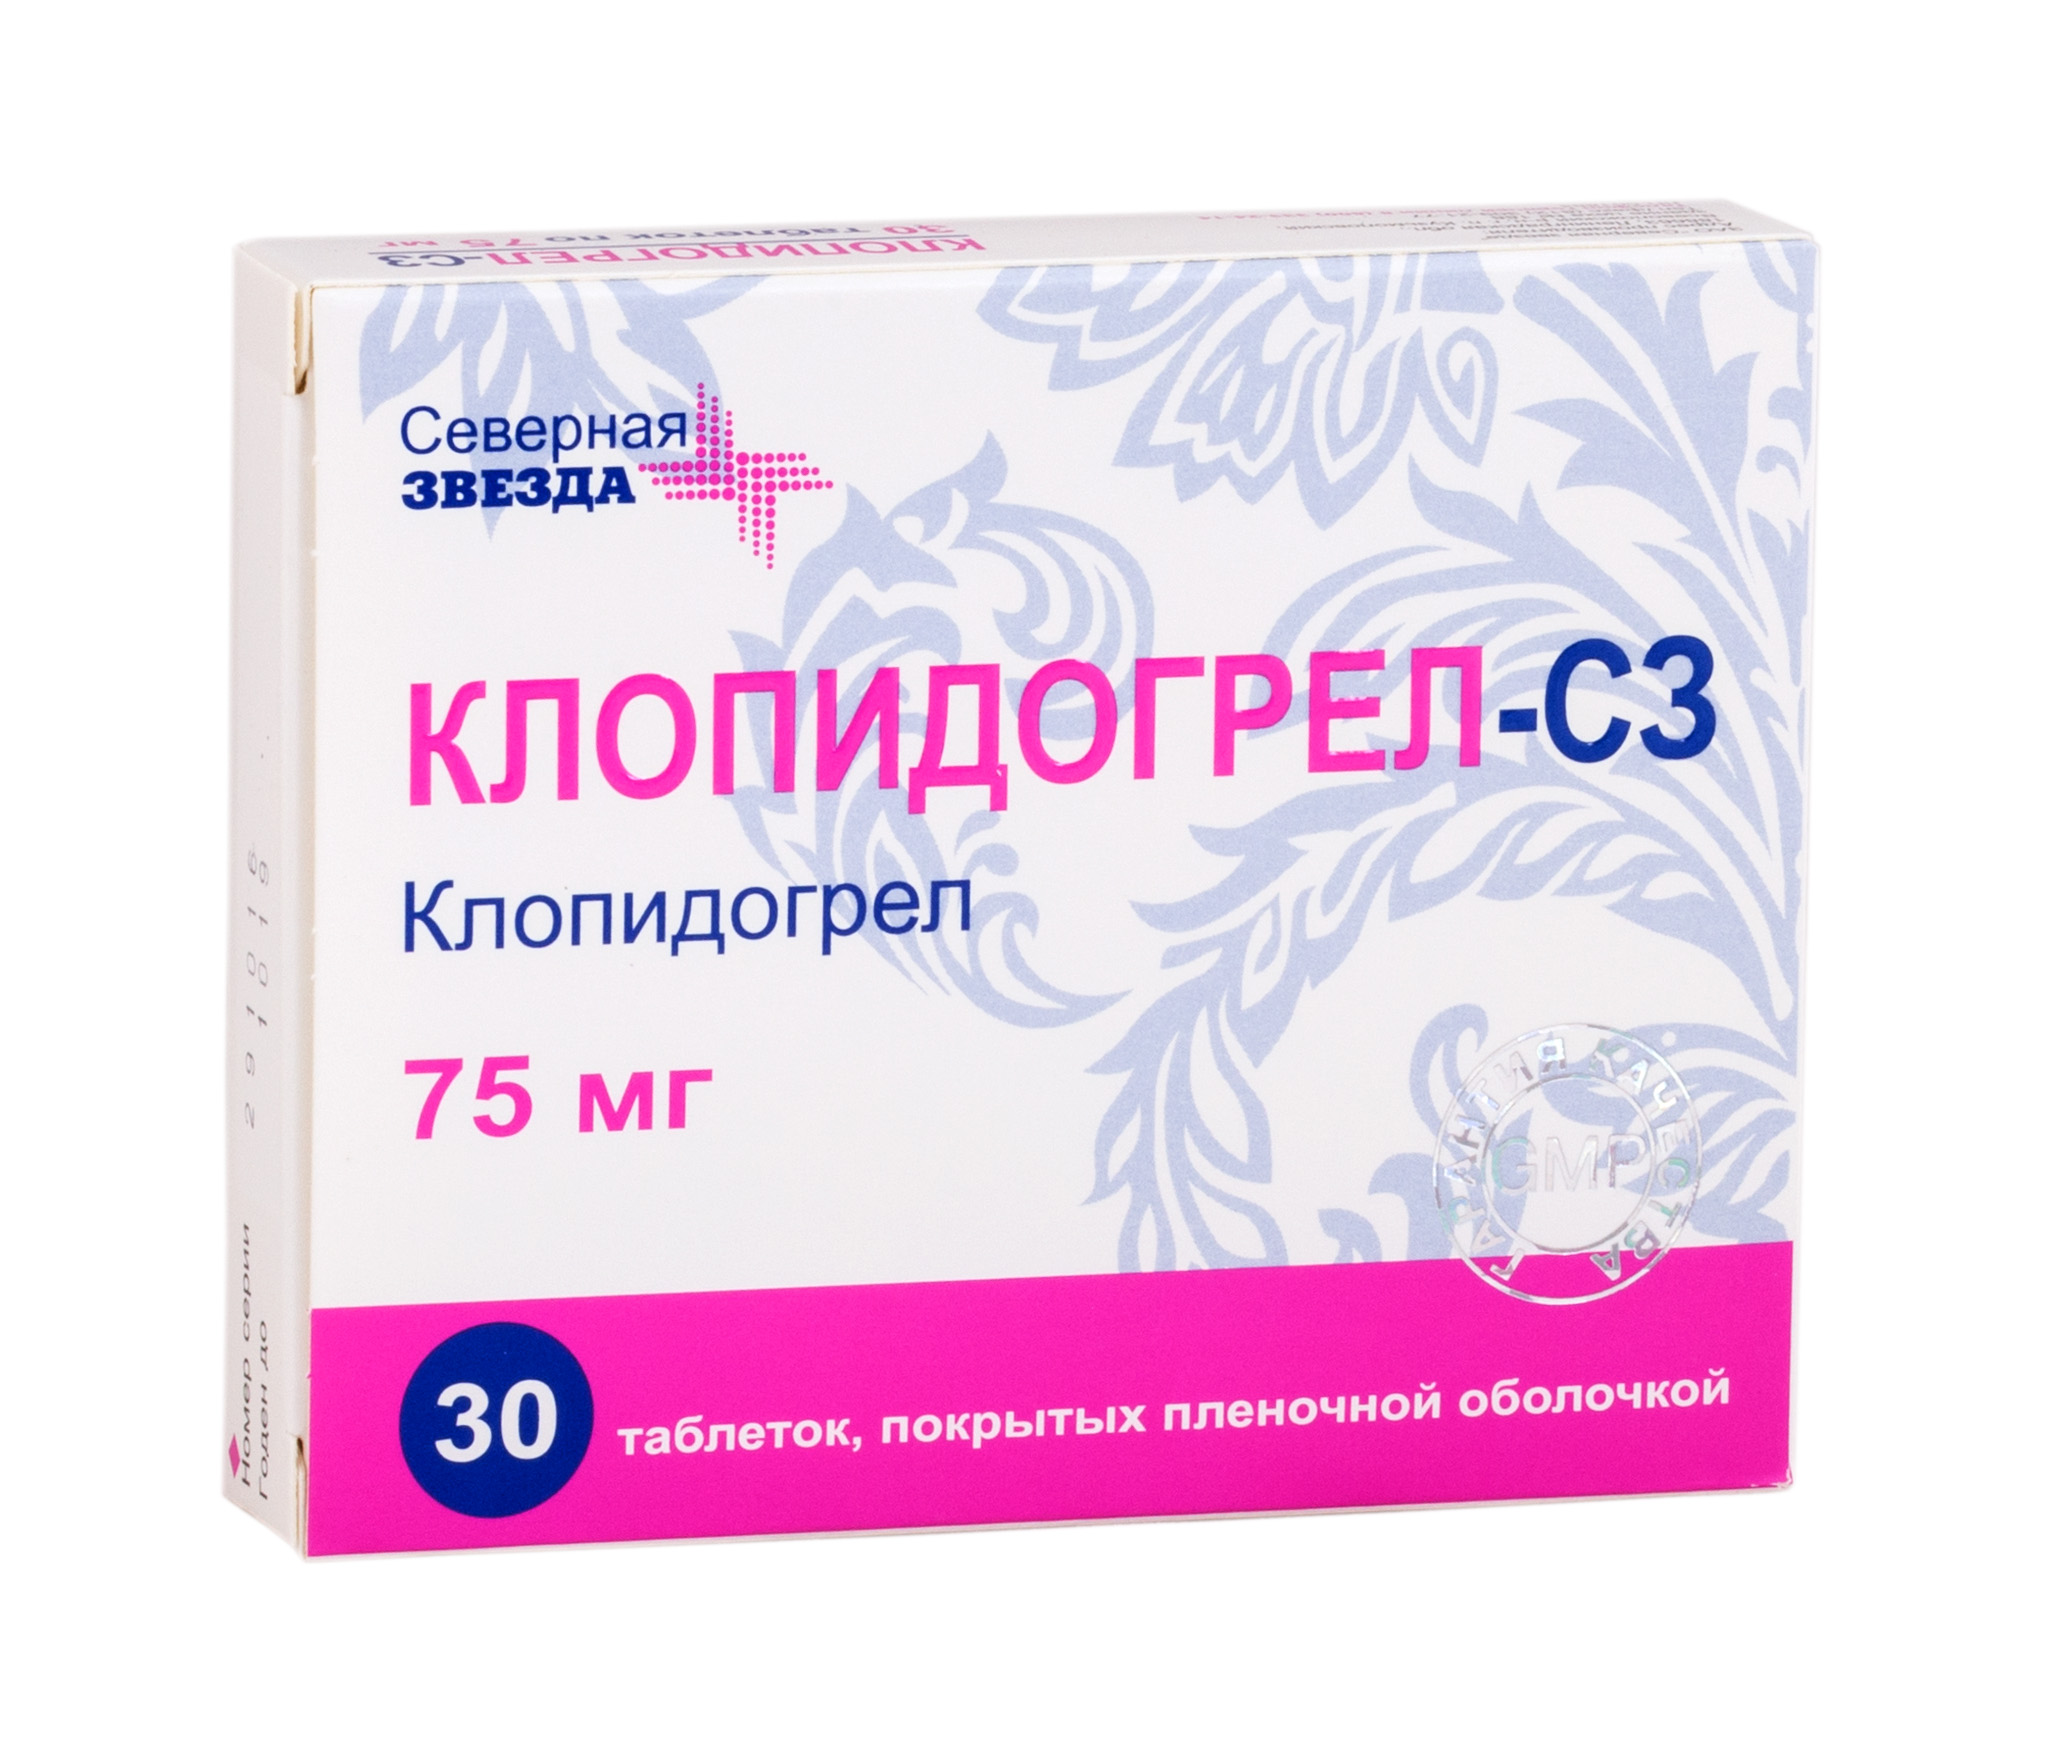 Aptekirls :: Клопидогрел-СЗ табл. п.п.о. 75 мг №30 — заказать онлайн .